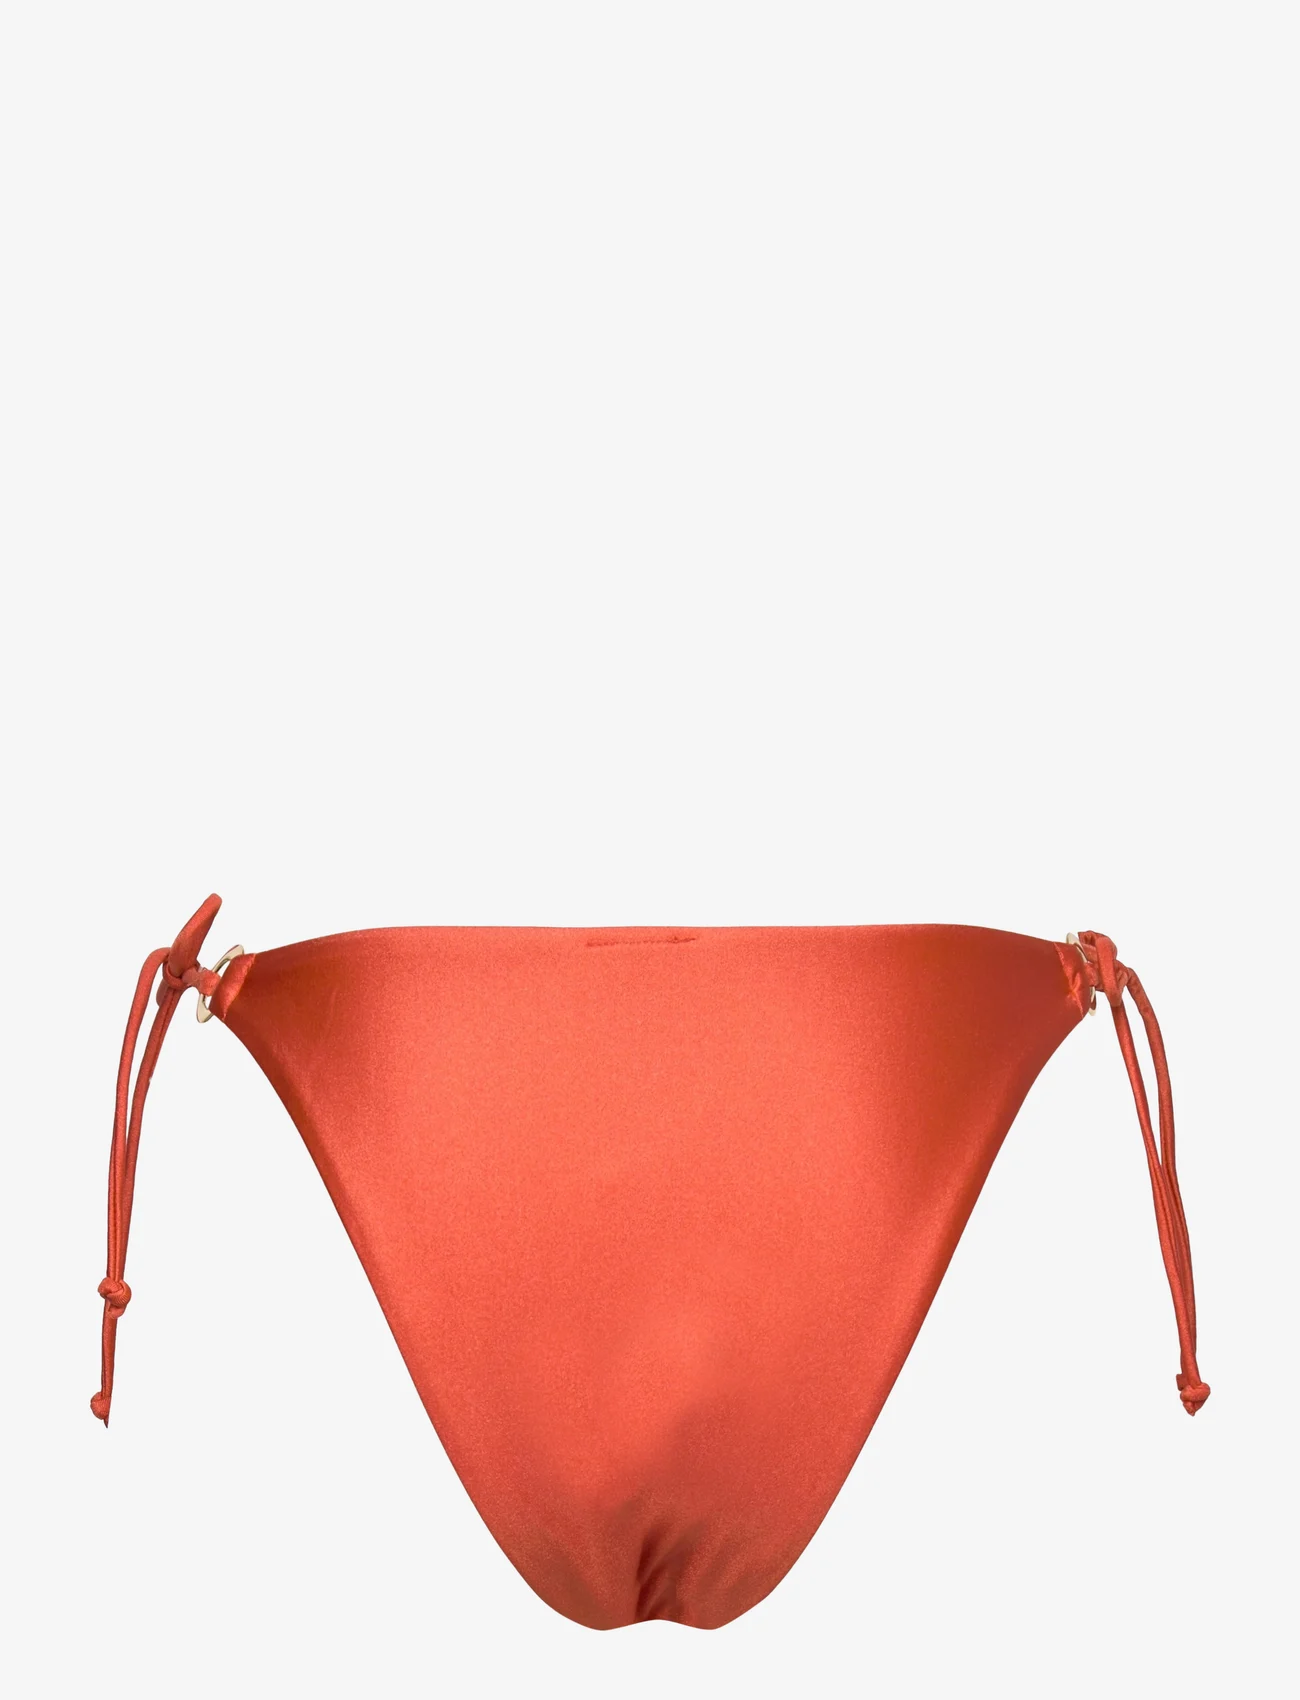 Hunkemöller - Corfu high leg t - bikinis mit seitenbändern - orange - 1